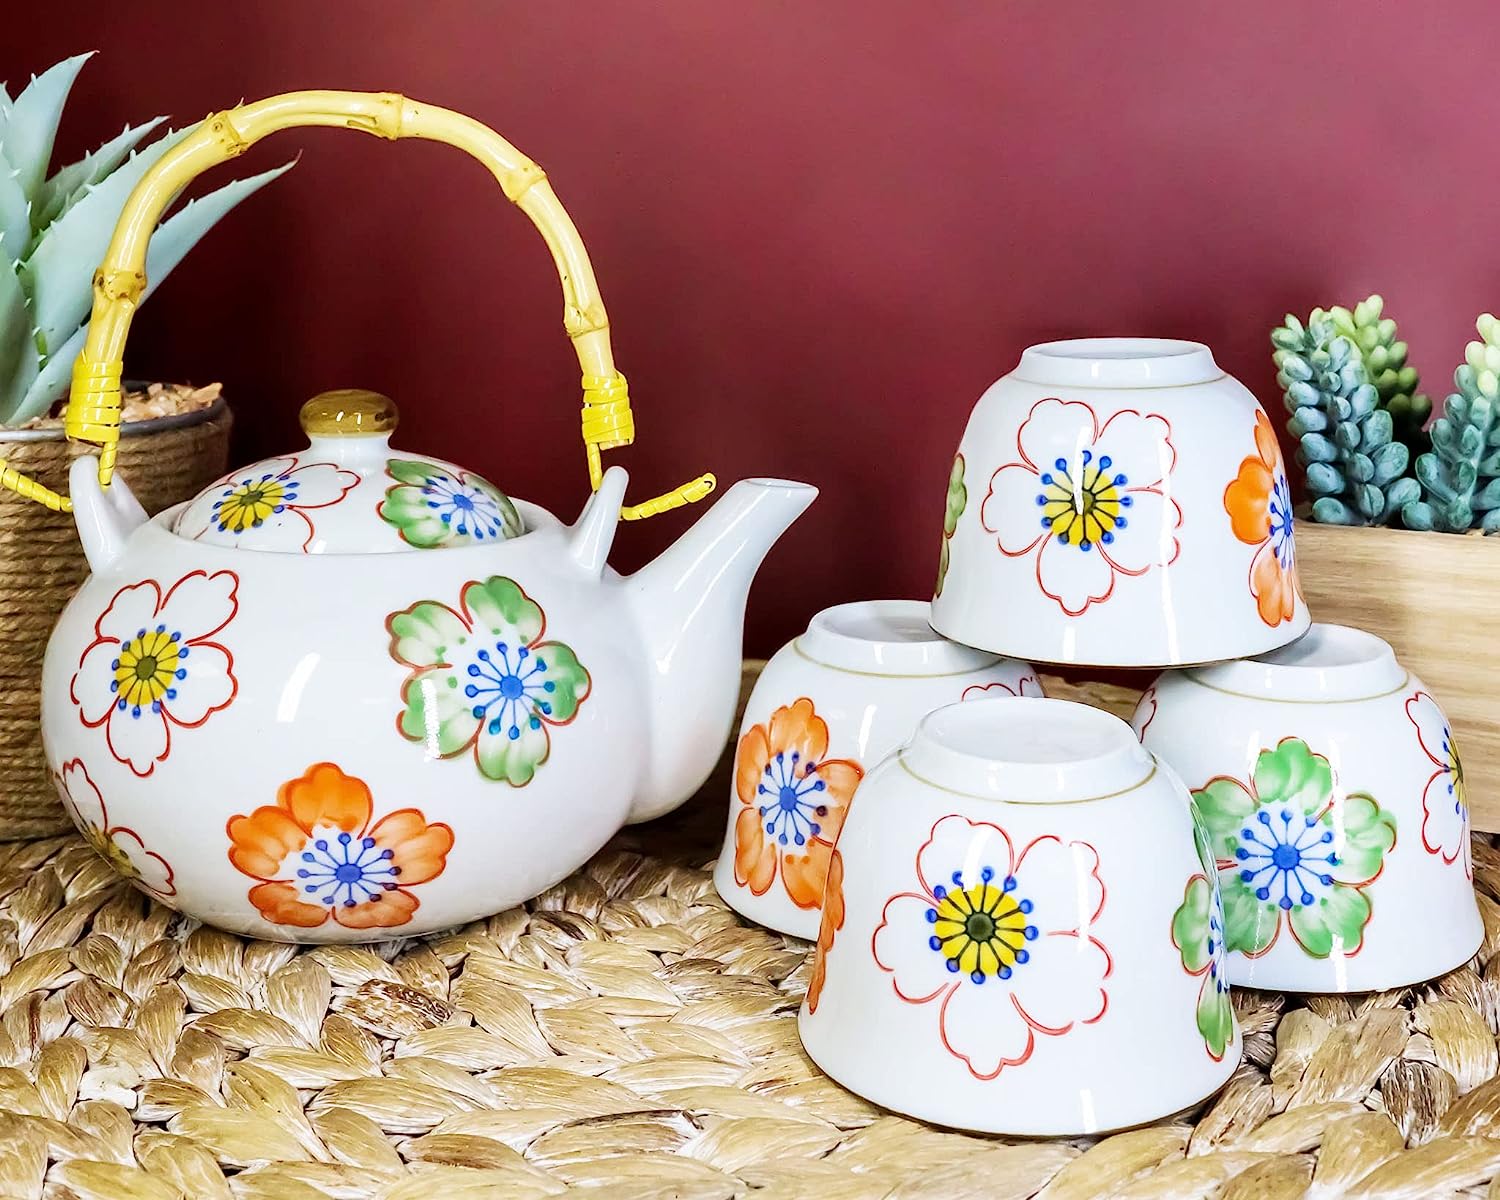 Ebros Gift Tea Pot and Cups. 22-Ounce